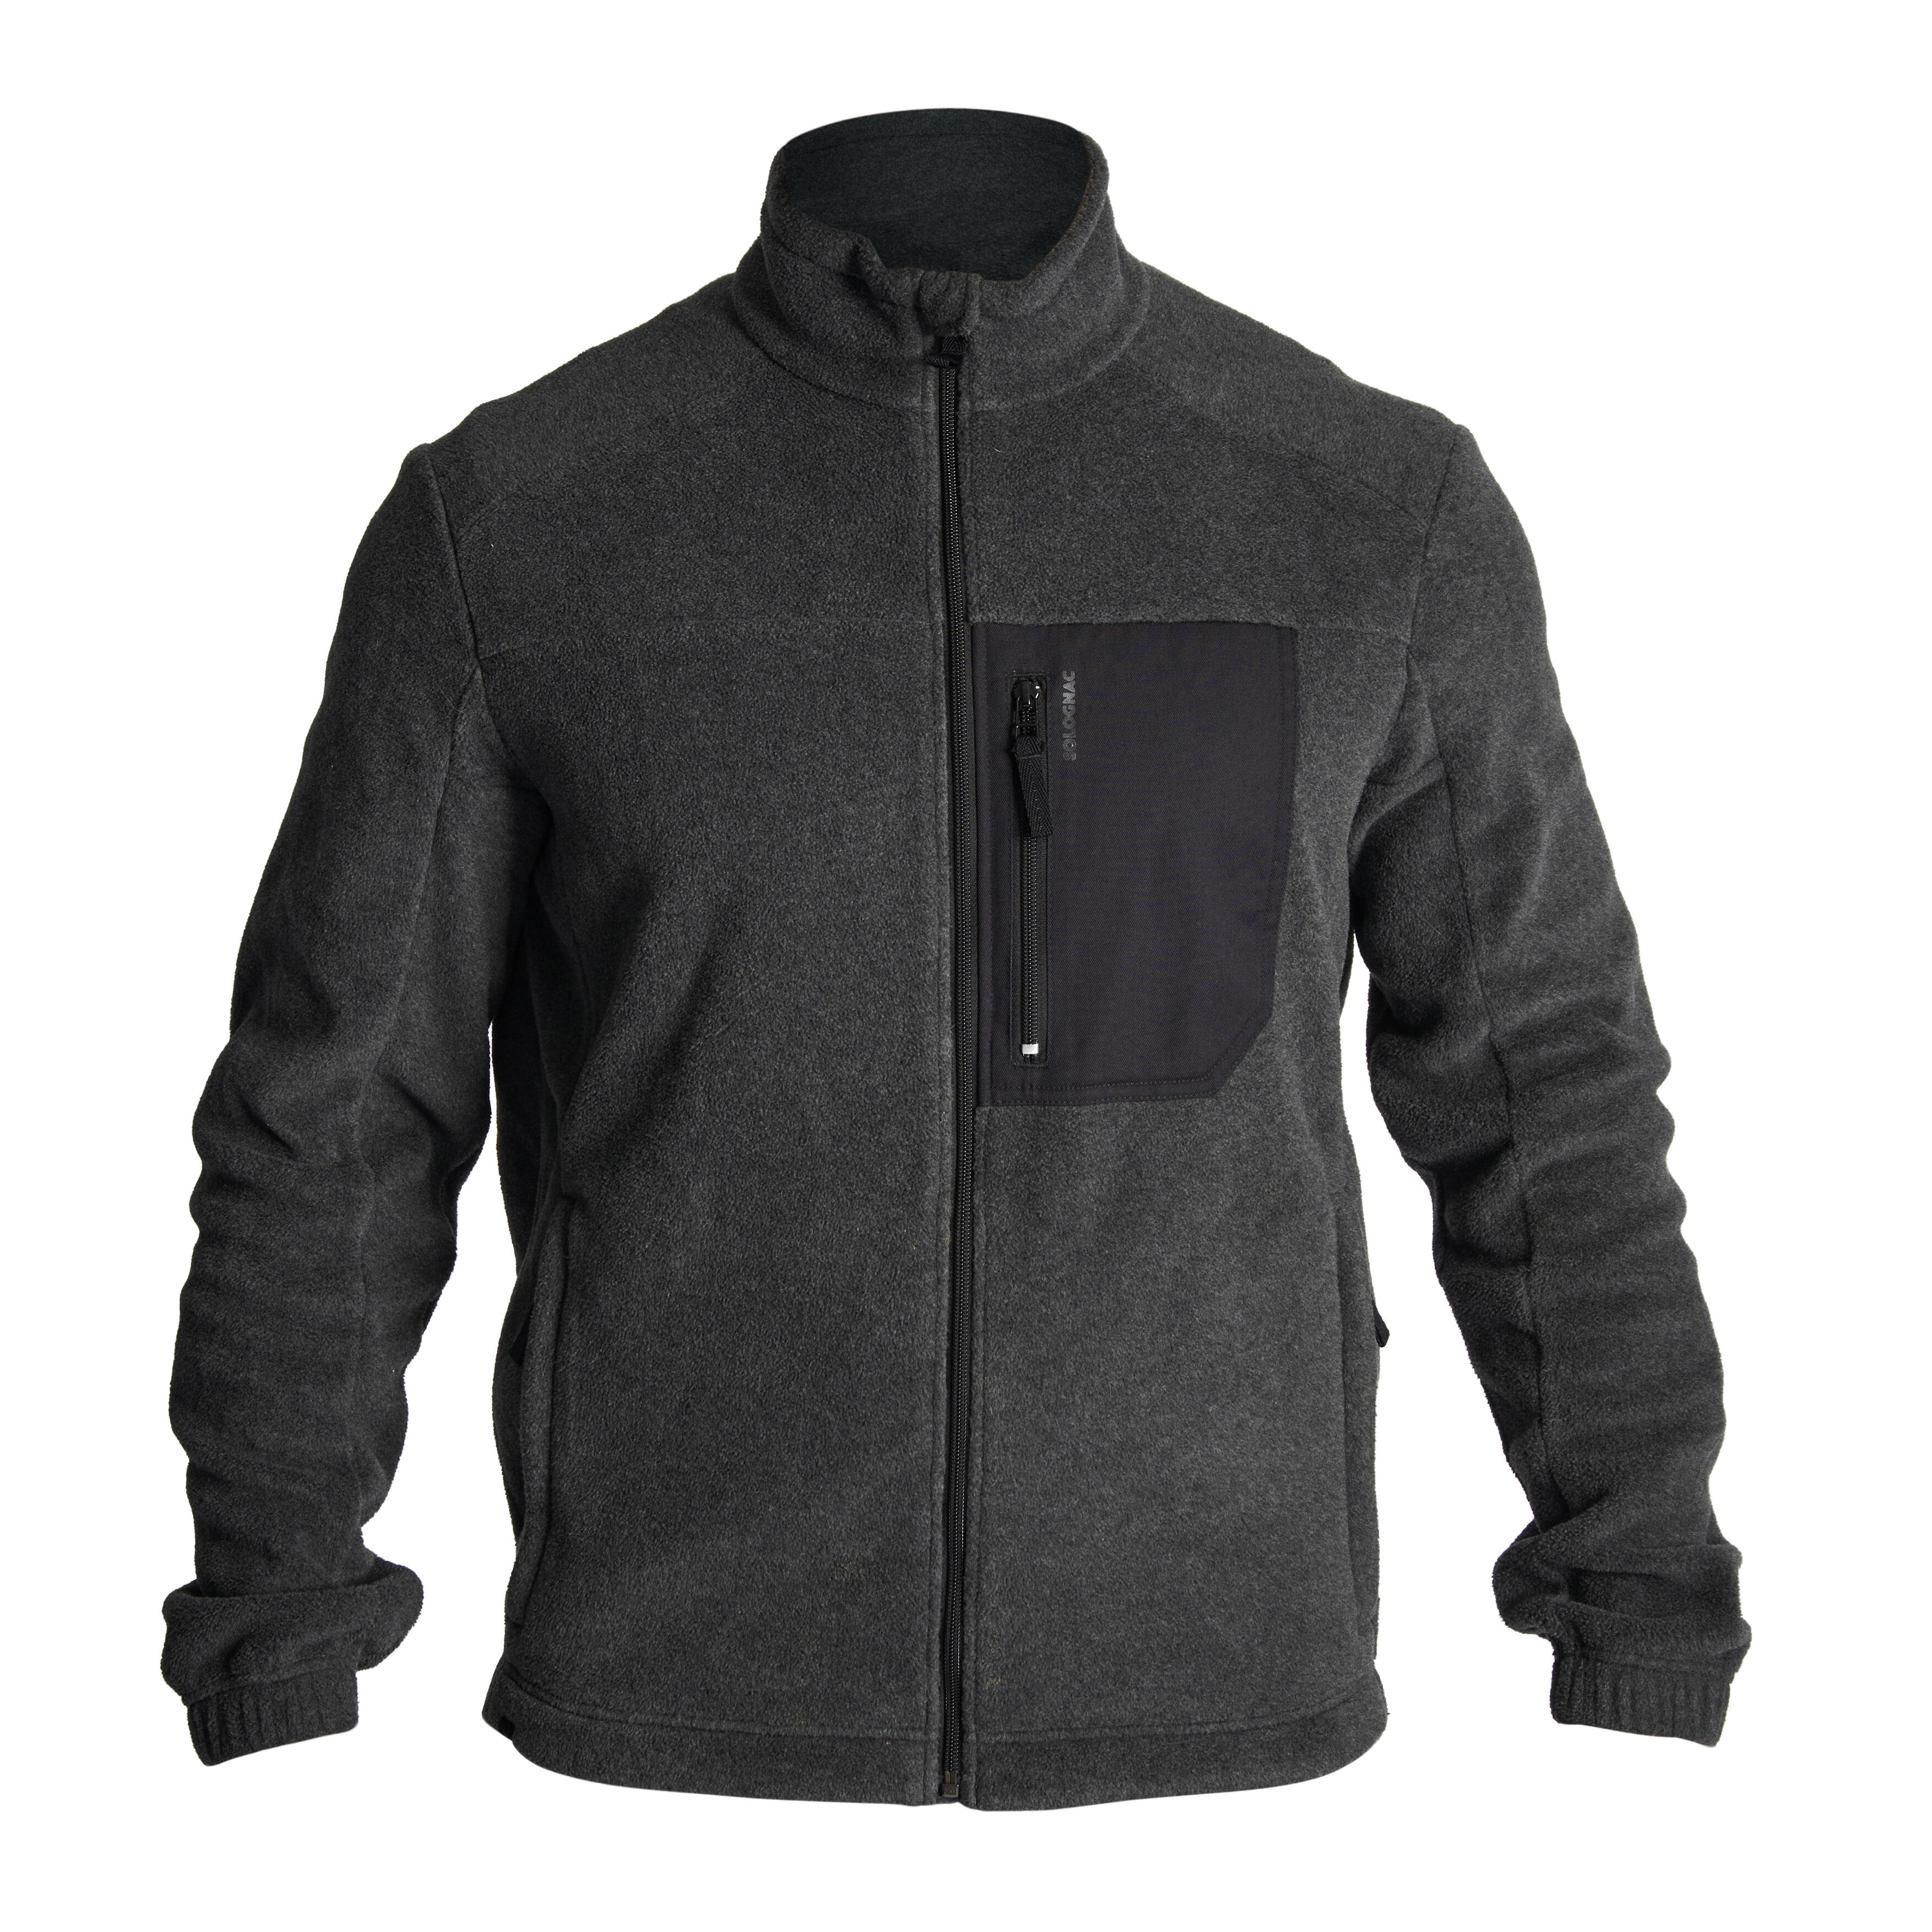 Unisex Adults Size M Winter Sports Coats, Jackets & Vests for sale | eBay